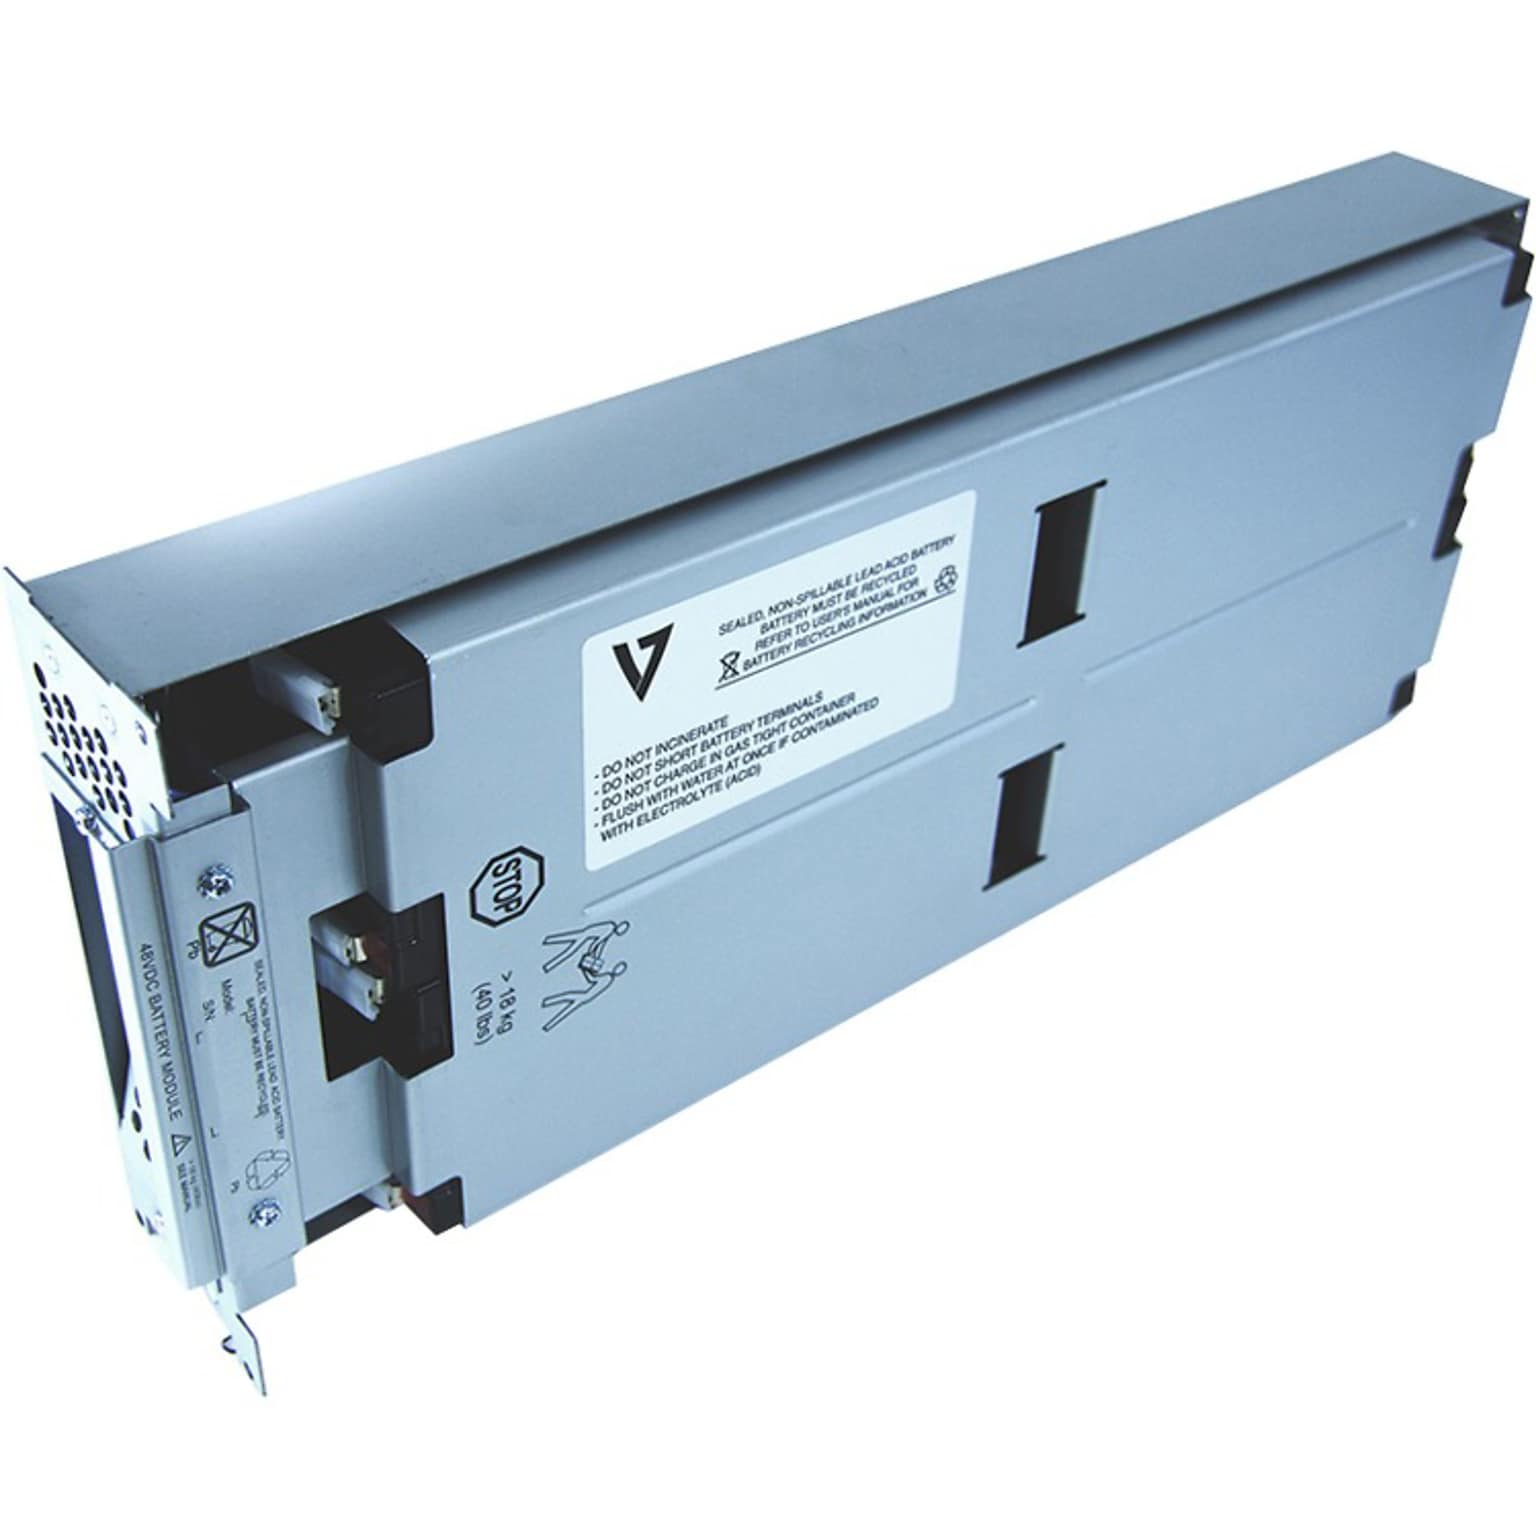 V7 UPS Replacement Battery, Gray  (RBC43-V7)